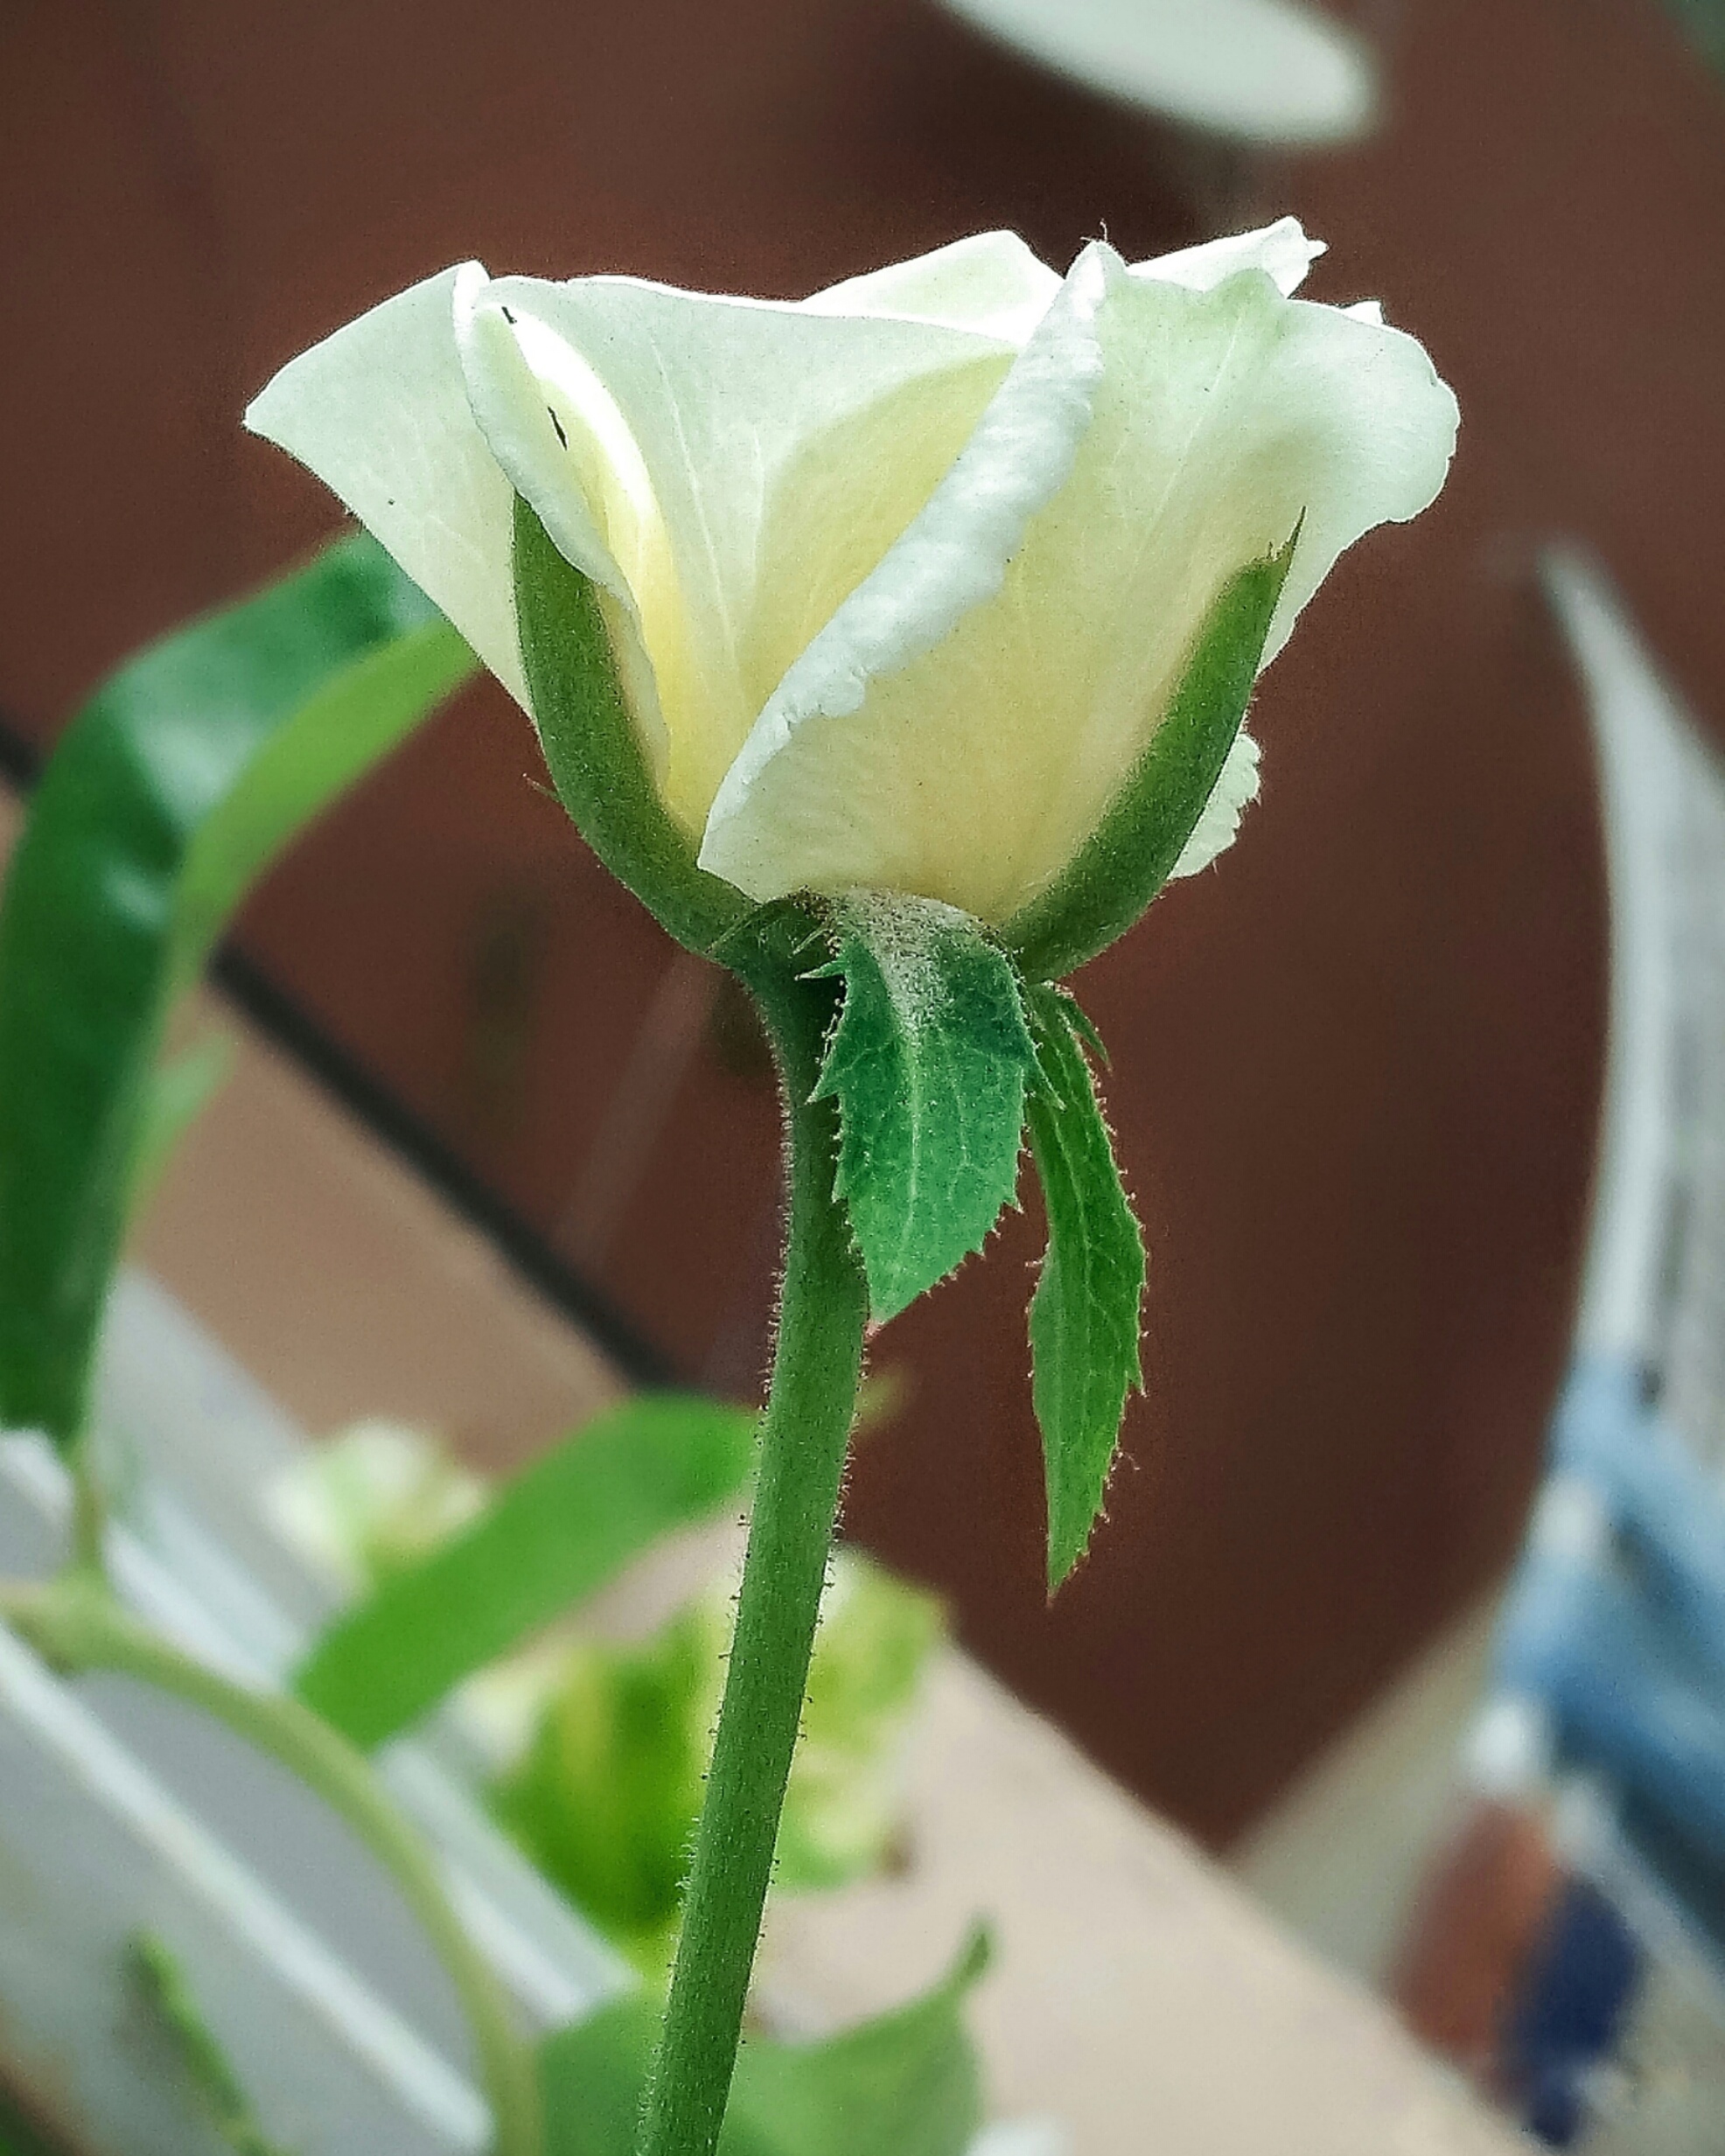 A white coloured rose